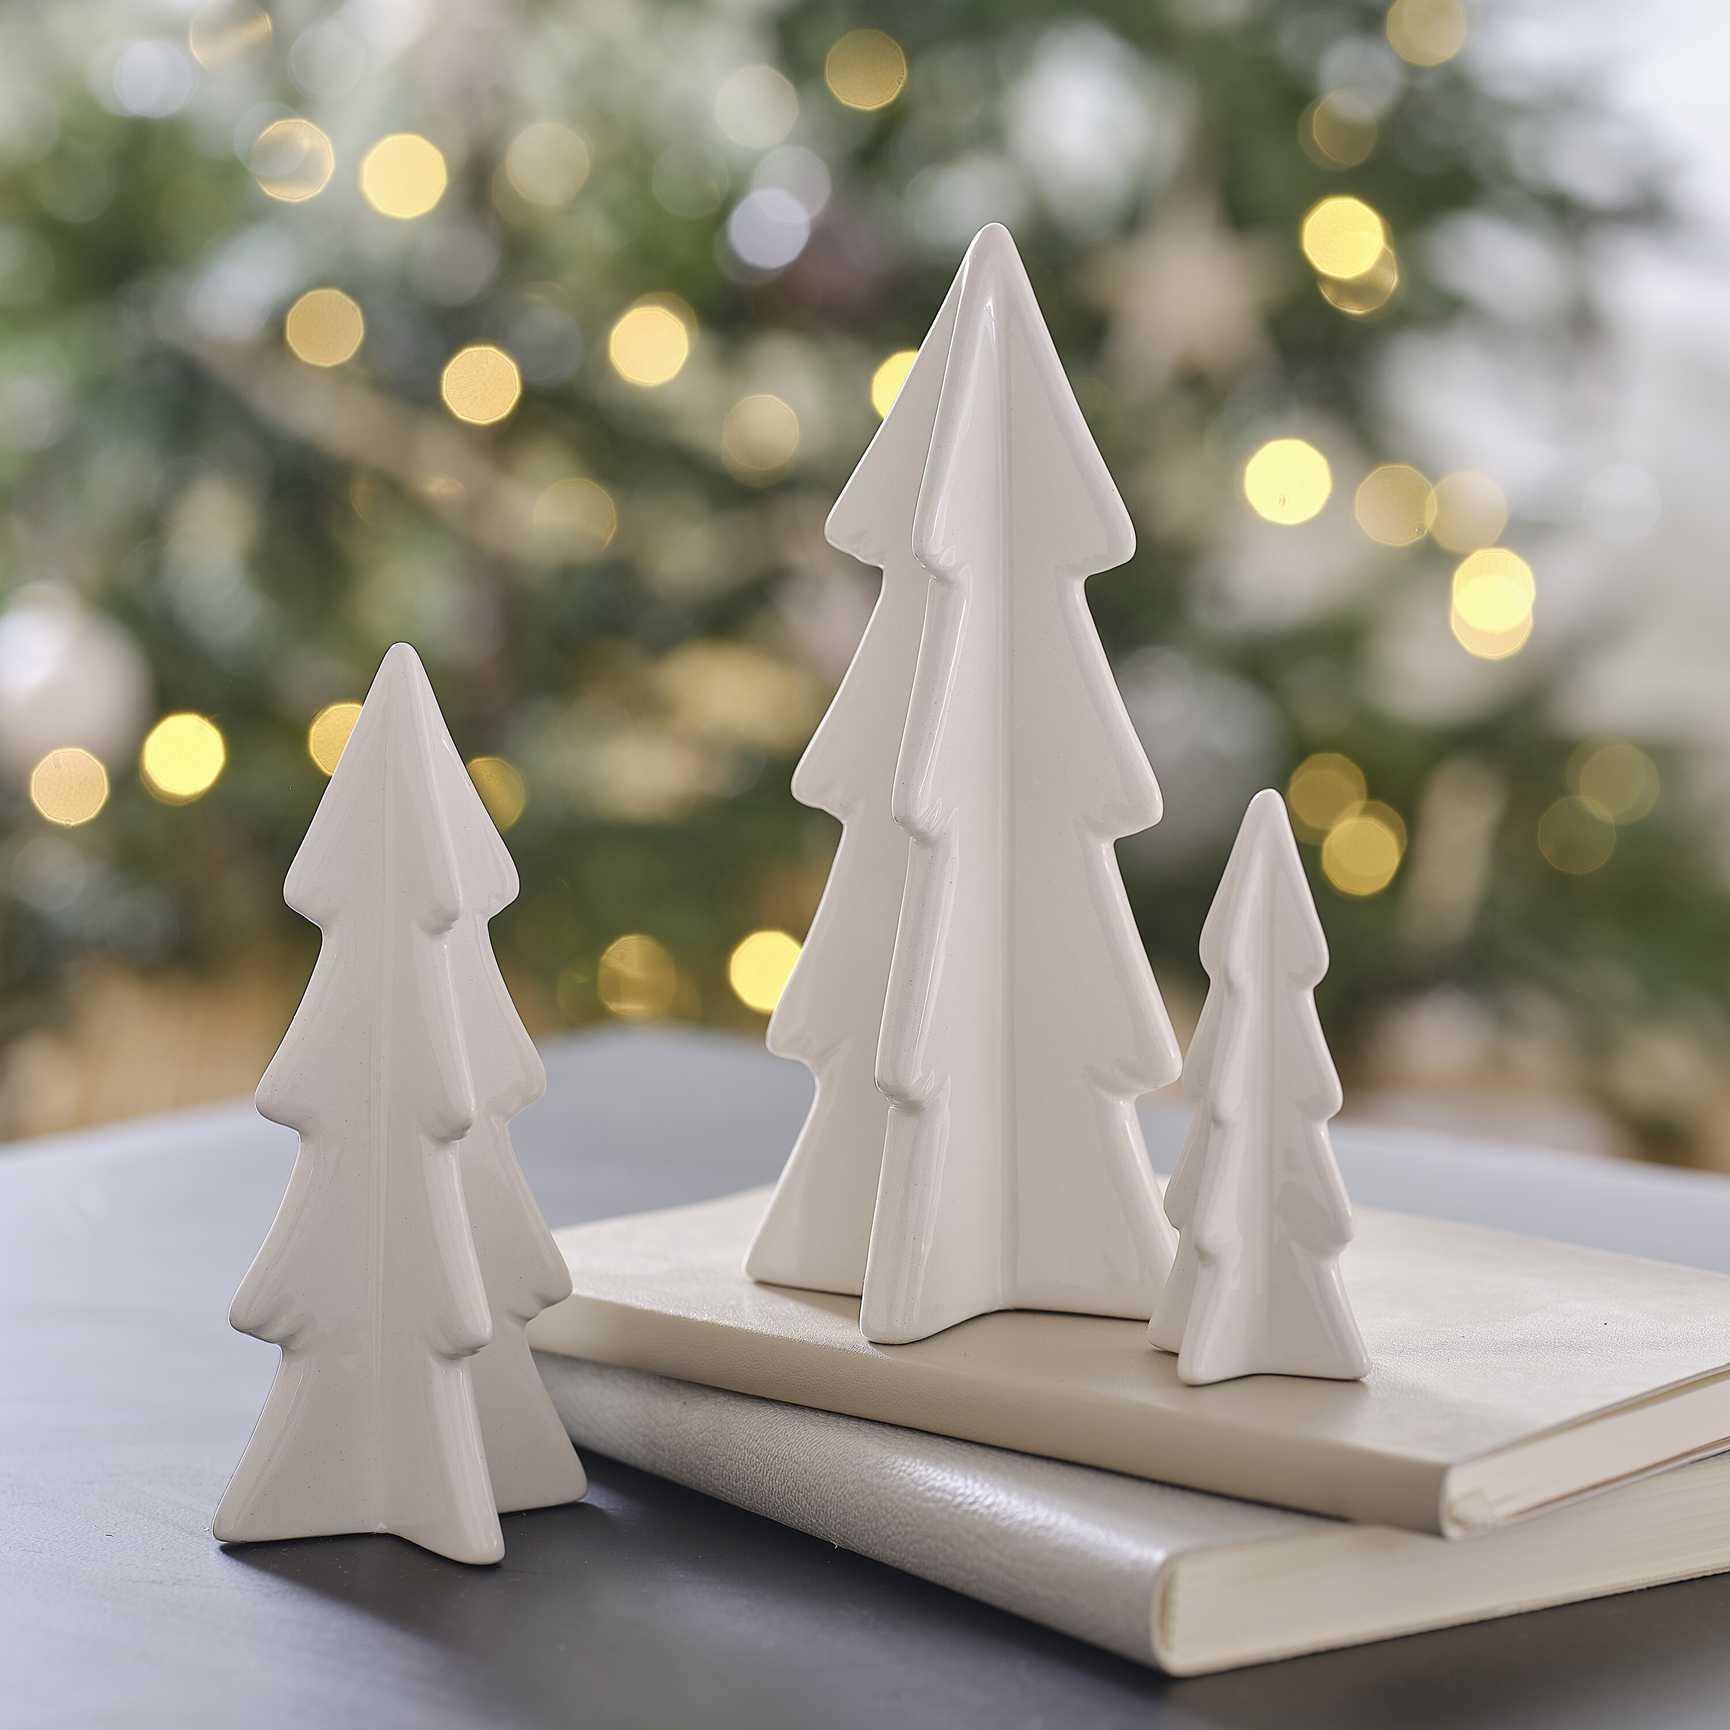 White Ceramic Christmas Trees set of three